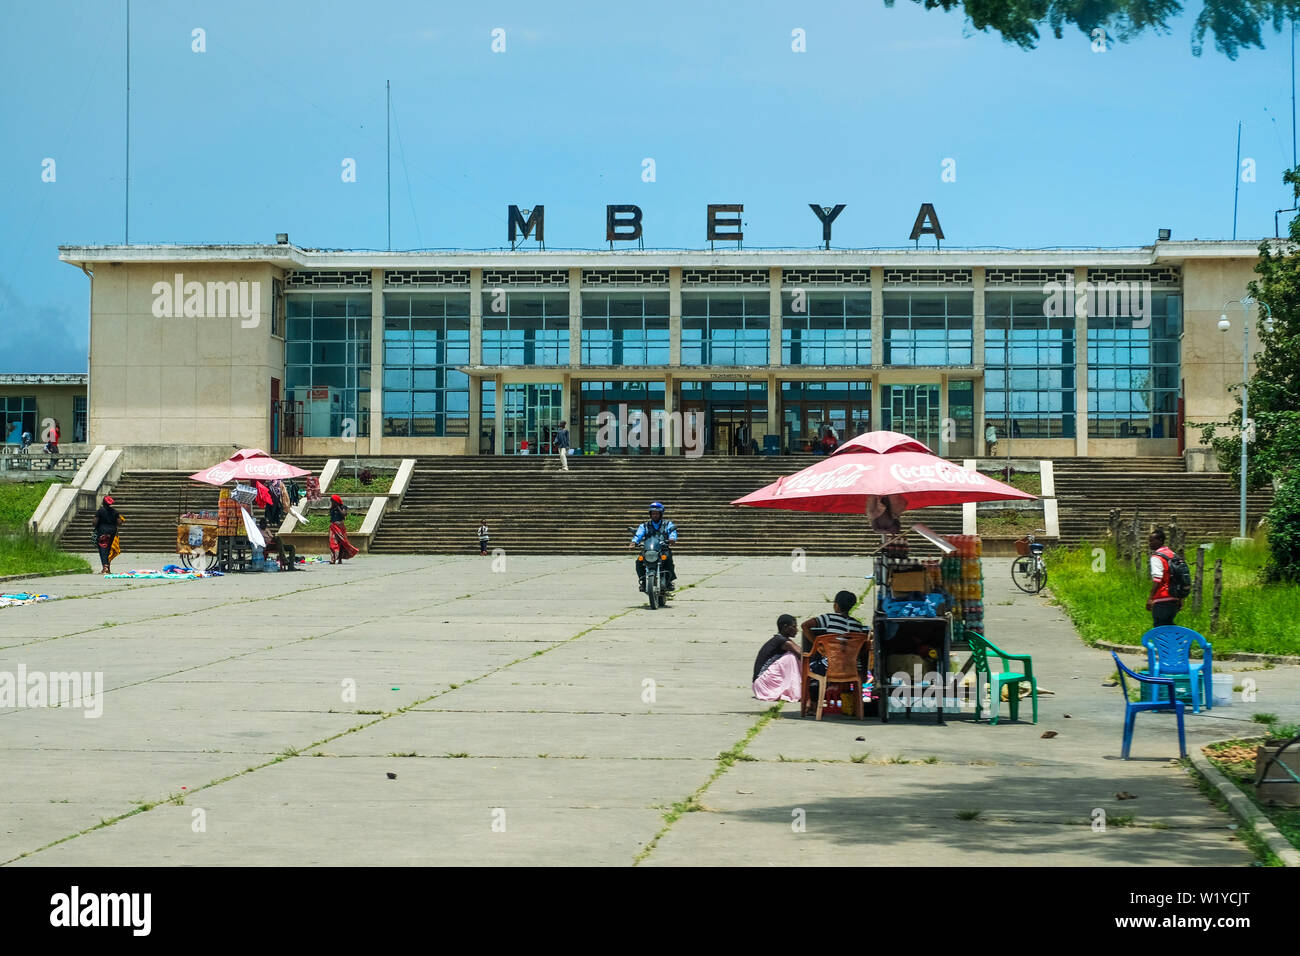 Railway station of the city of Mbeya, Tanzania, Africa   ---   Bahnhof von Mbeya, Tansania. Stock Photo